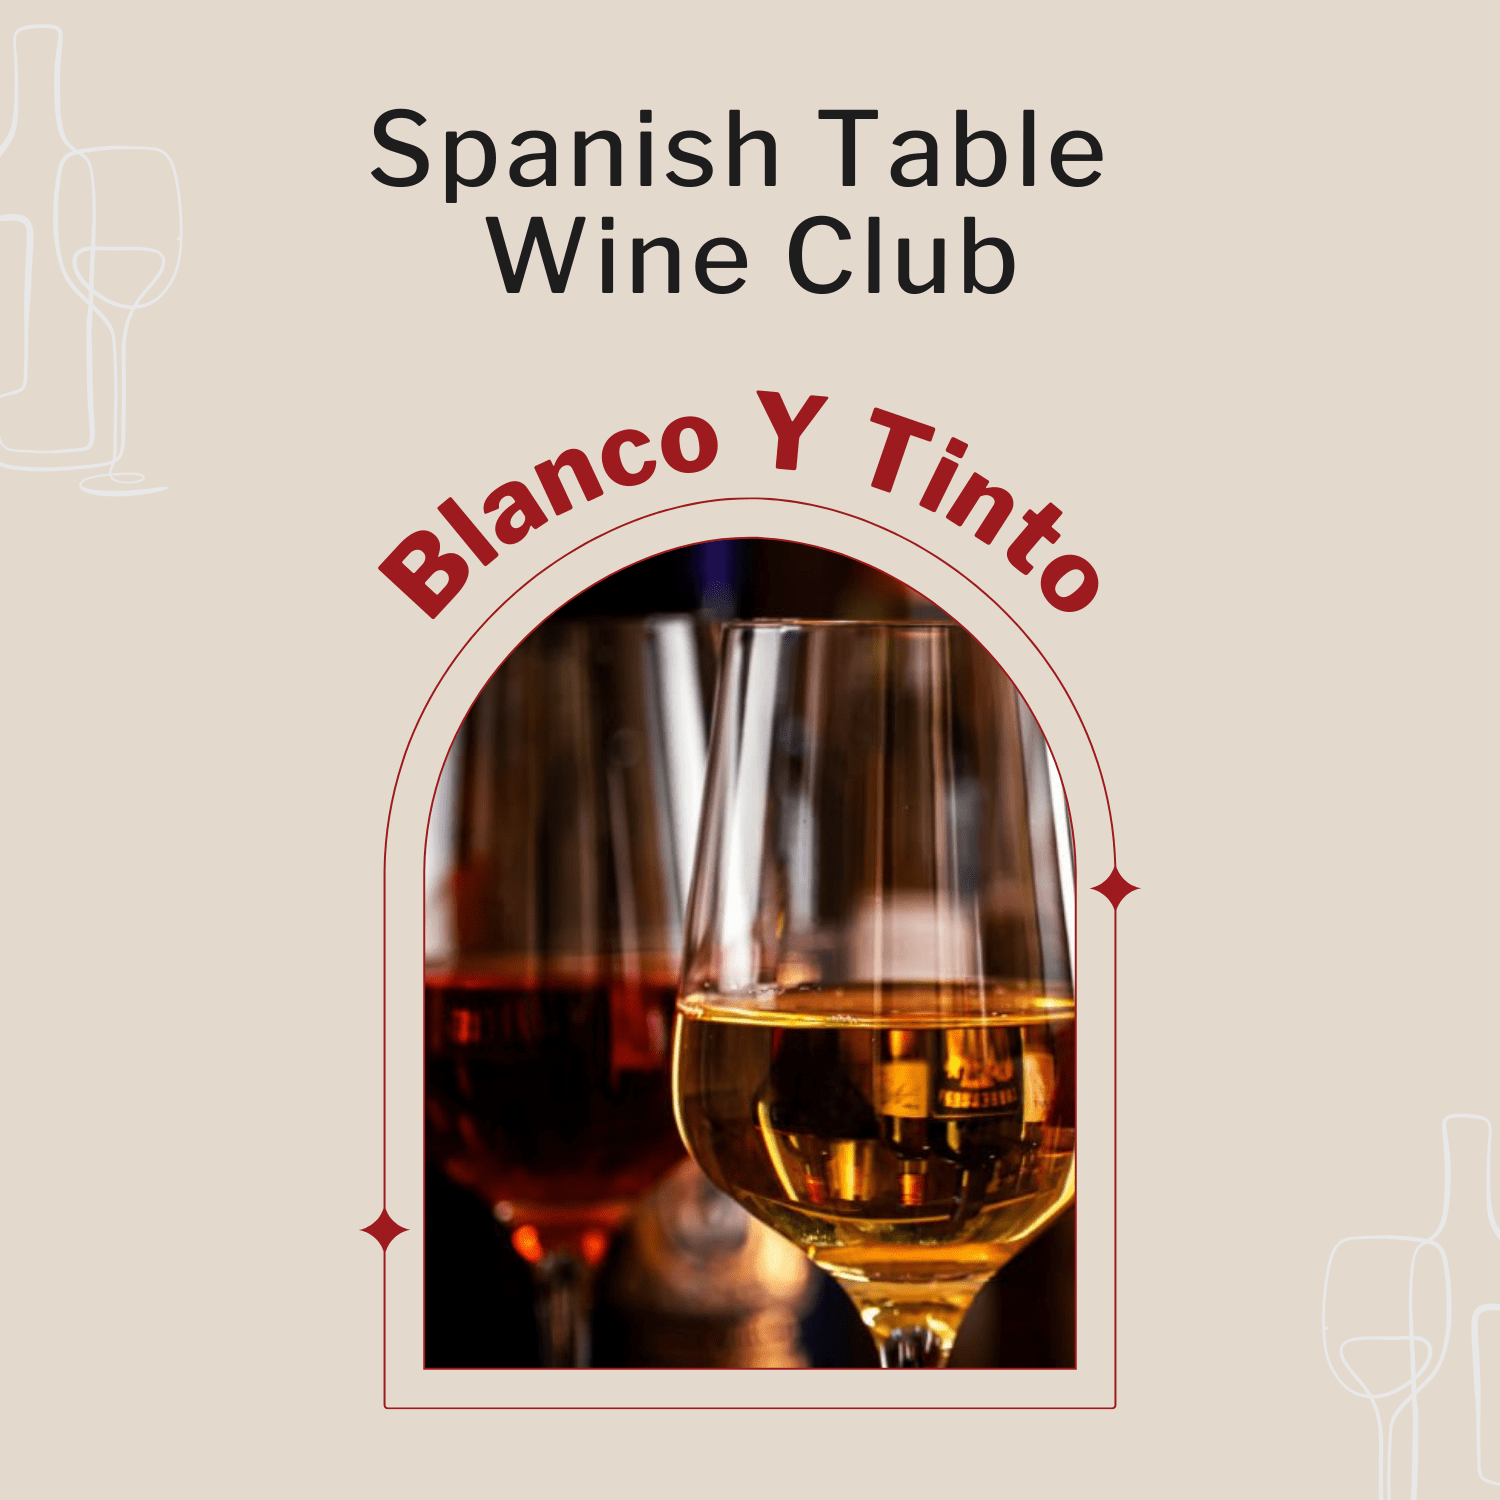 The Spanish Table Wine Club